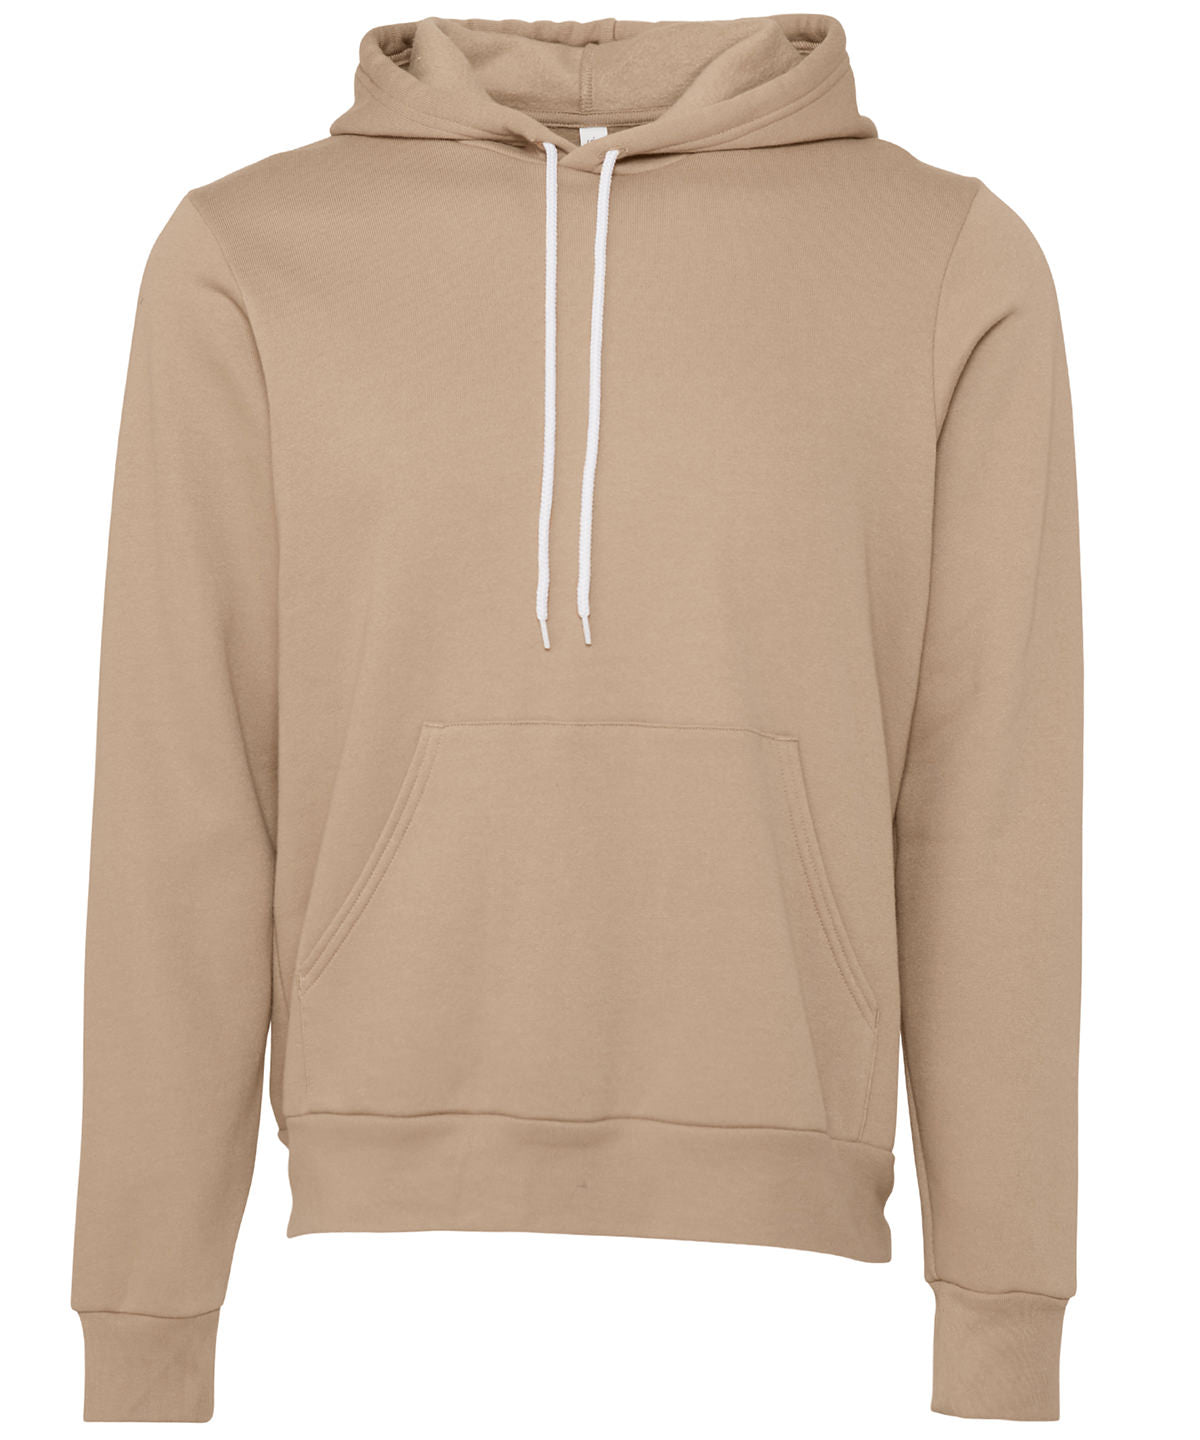 Bella Canvas Unisex polycotton fleece pullover hoodie Tan